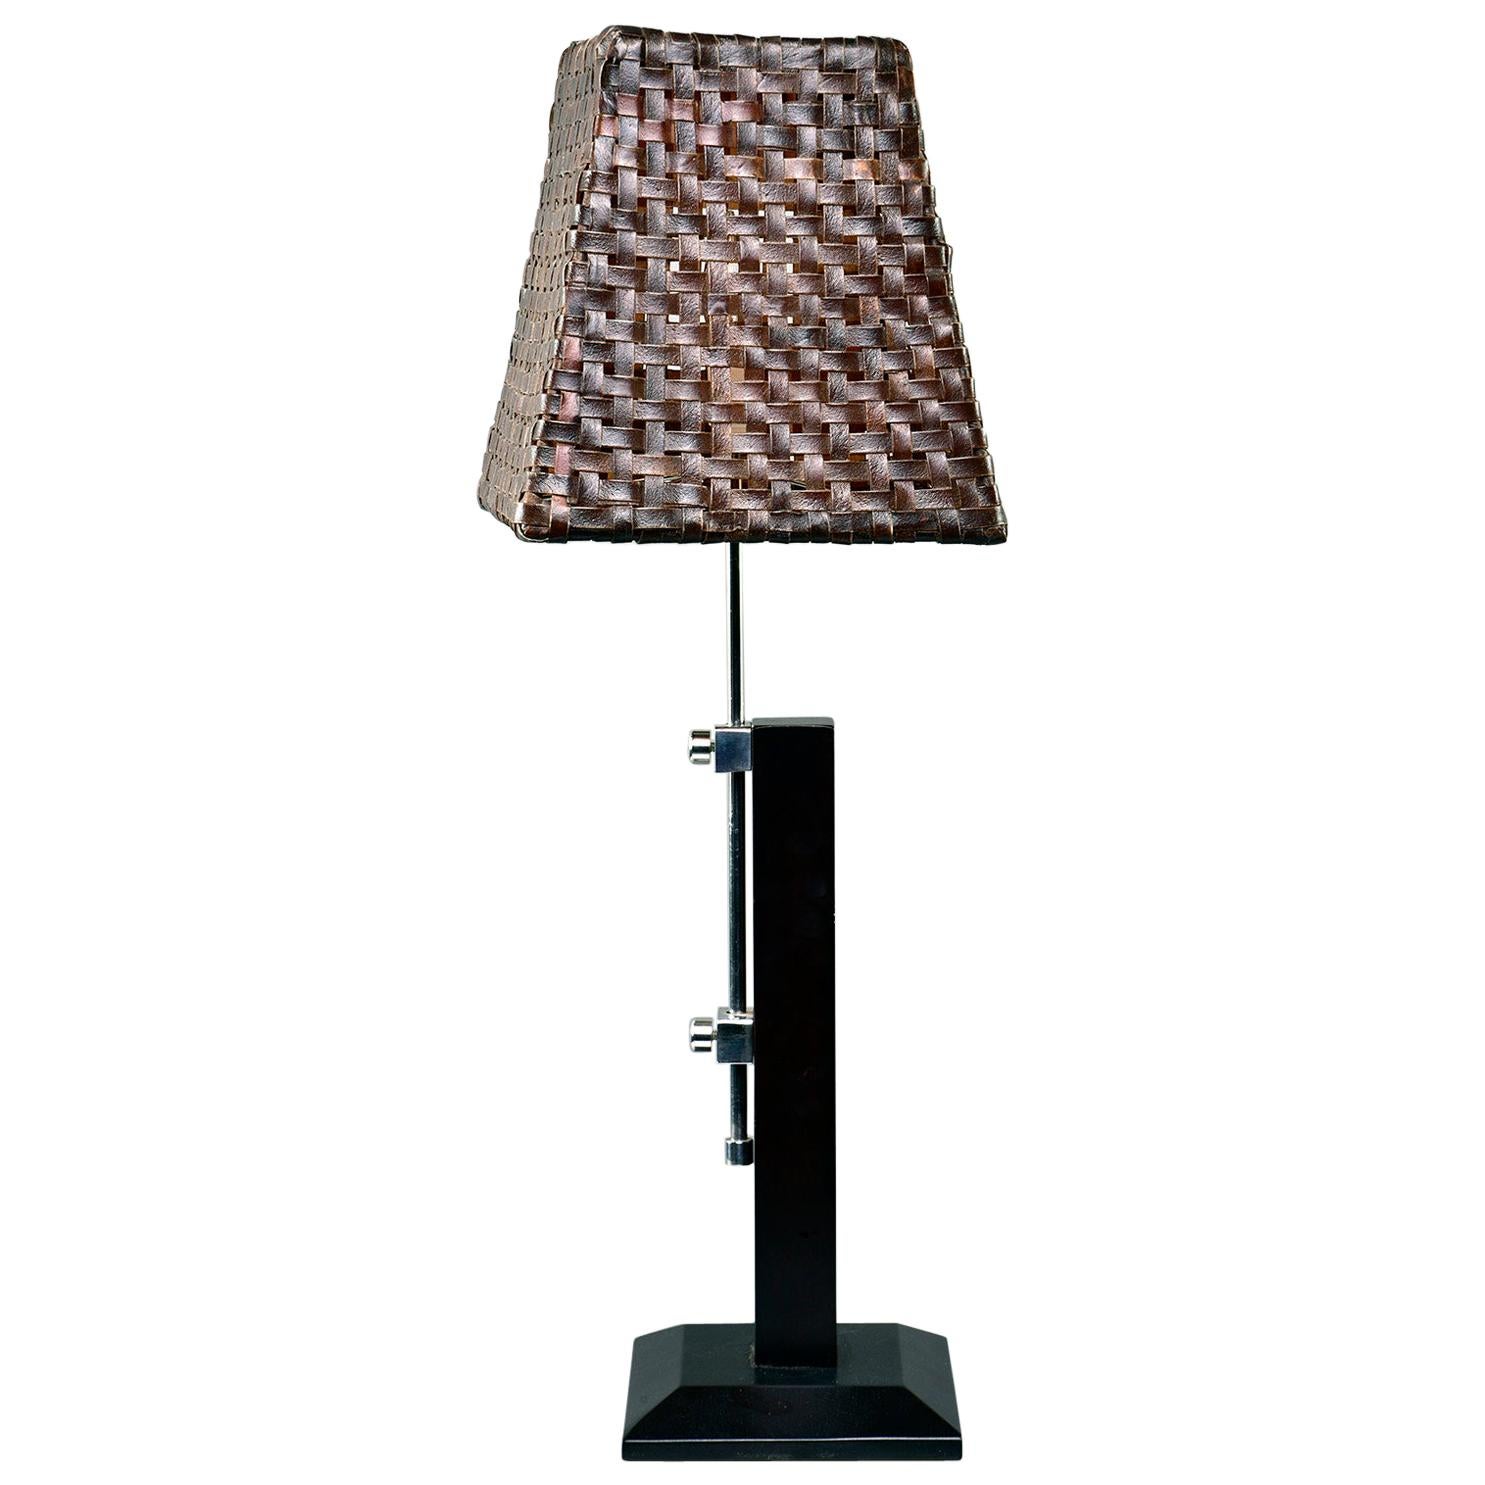 Midcentury Italian Adjustable Lamp with Original Woven Leather Shade